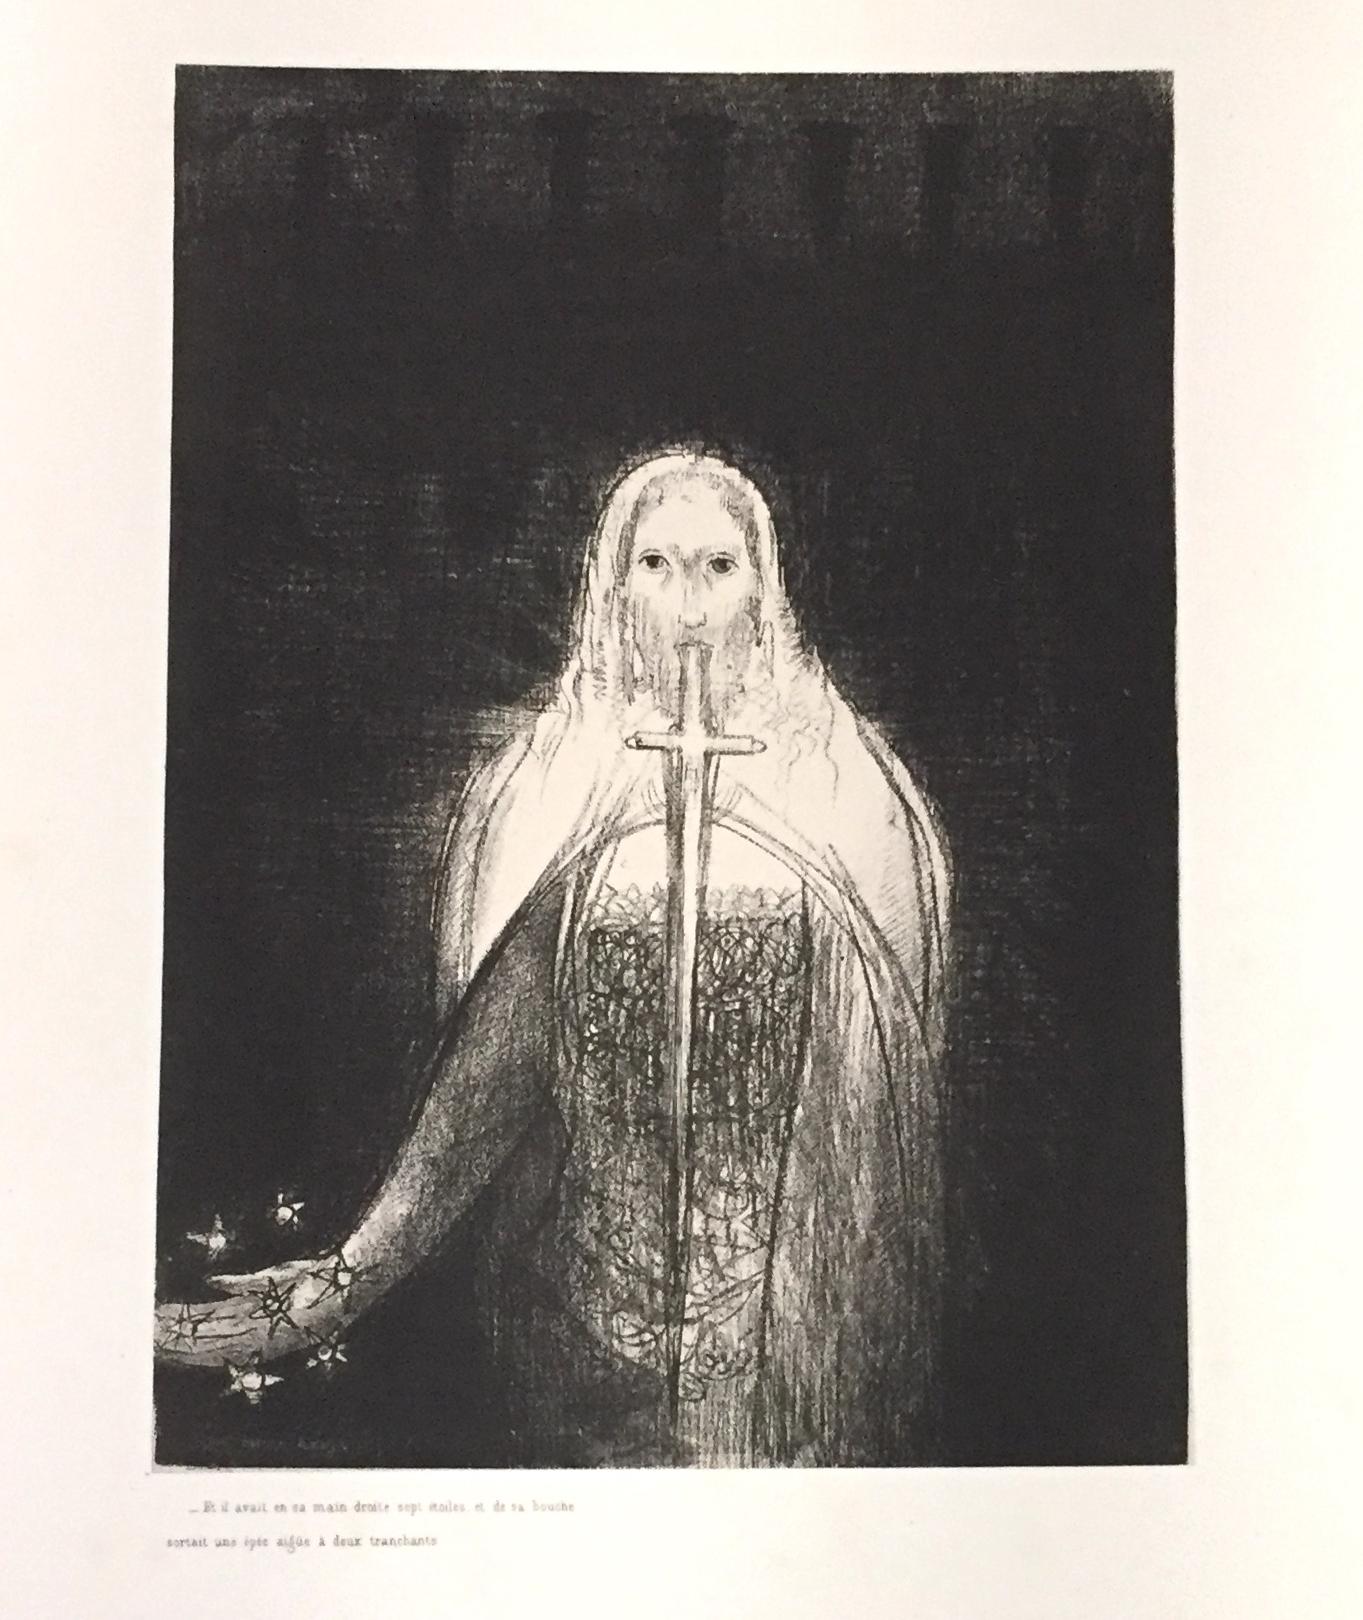 Odilon Redon Print - Et is avait en sa main droite sept étoiles - Litho by O. Redon - 1899